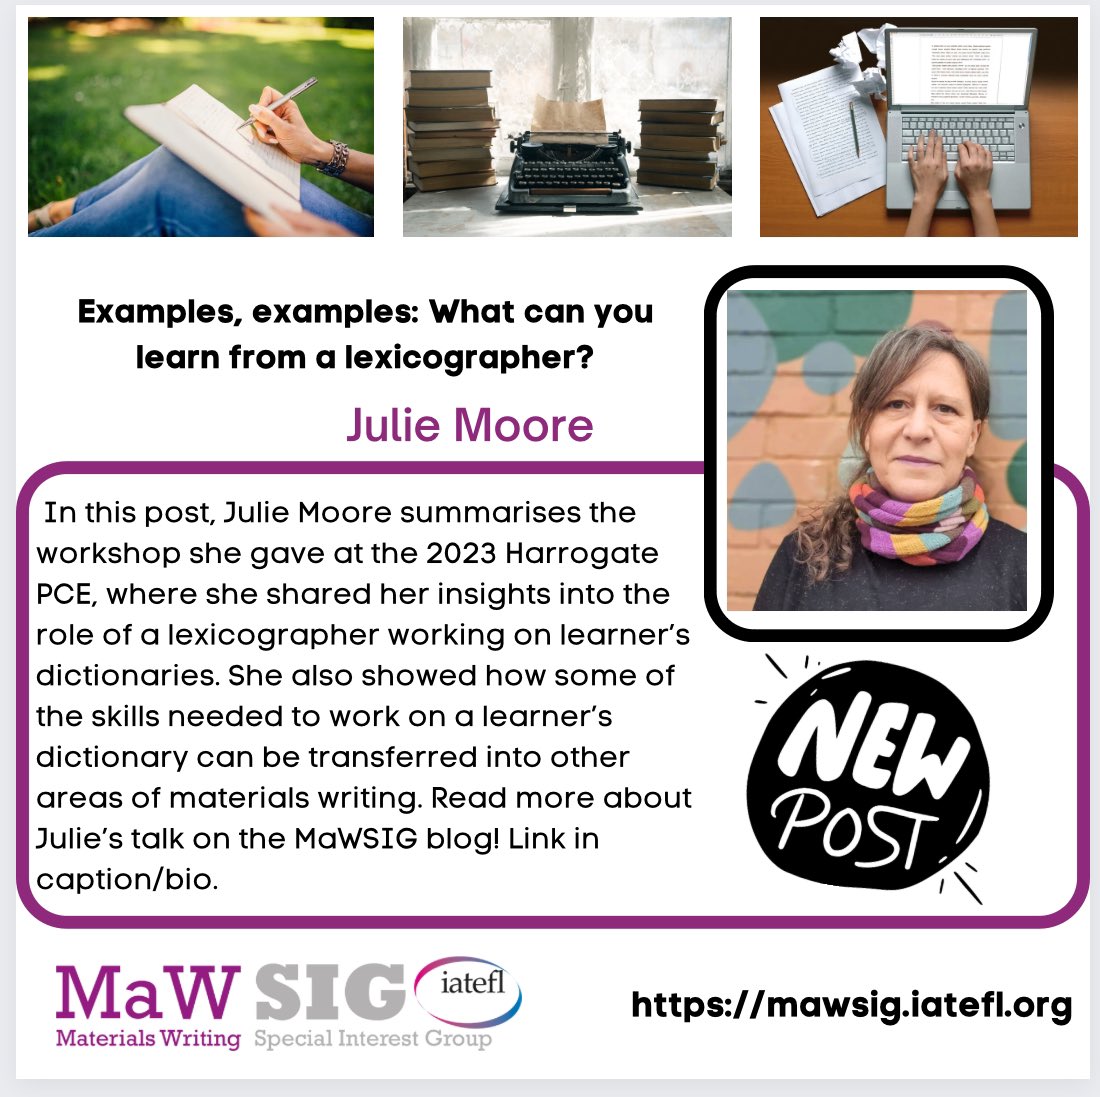 New blog post alert! Julie Moore summarises the workshop she gave at the 2023 Harrogate PCE. Read more about Julie’s workshop here: mawsig.iatefl.org/blog/examples-… #iatefl #mawsig #tefl #teflteacher #lexicographer